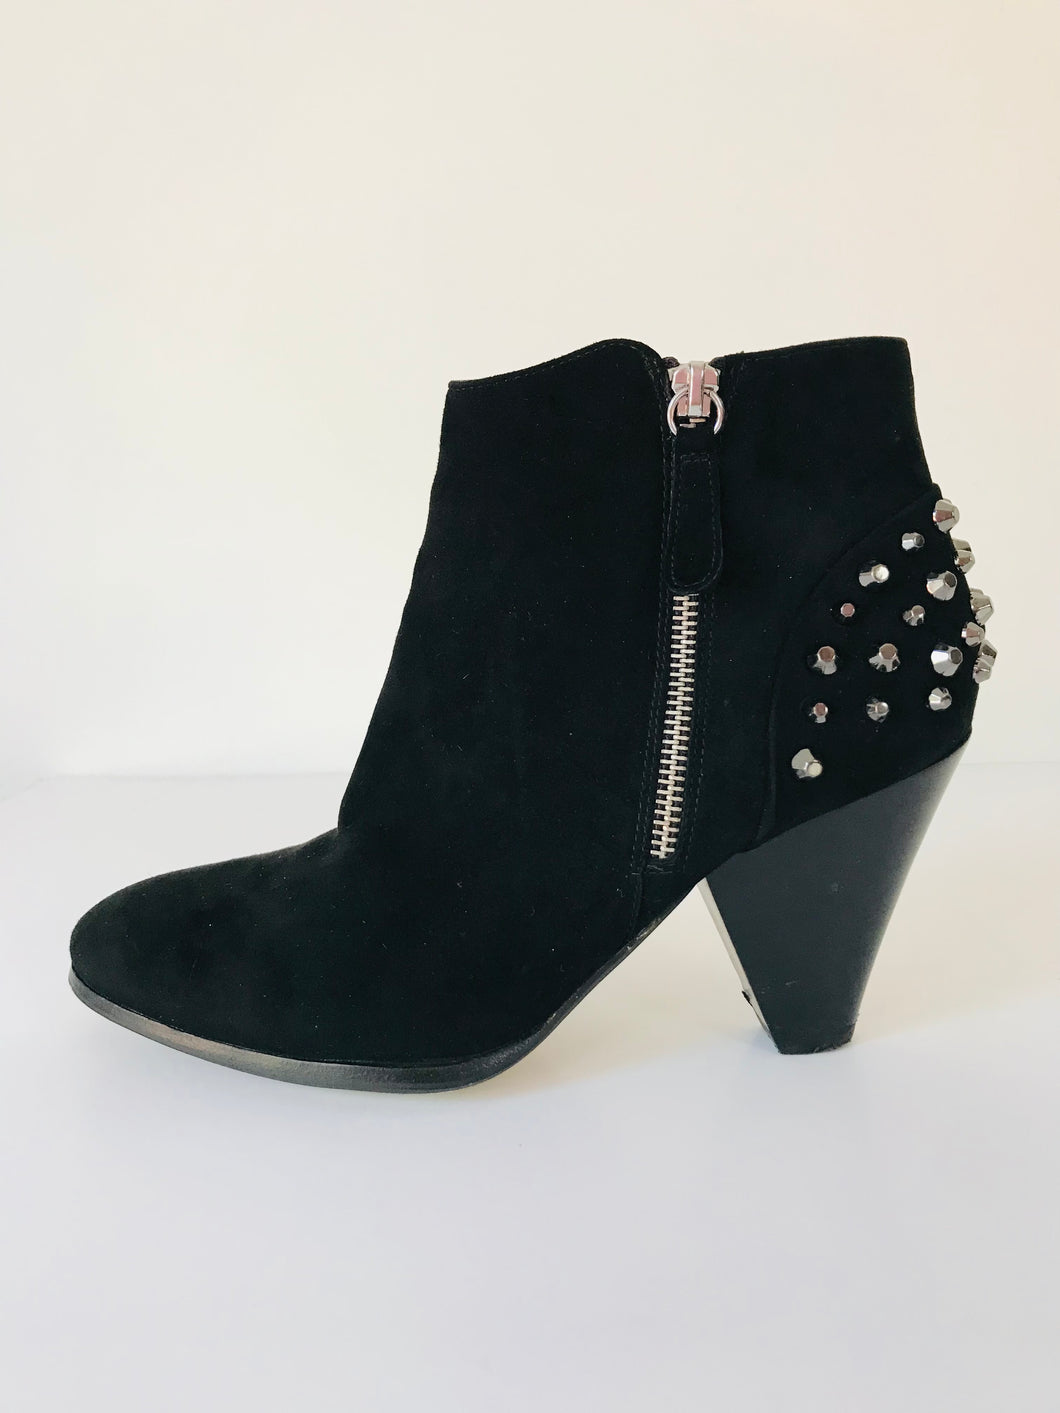 Mary Portas Clarks Women's Suede Stud Heeled Boots | UK5 | Black